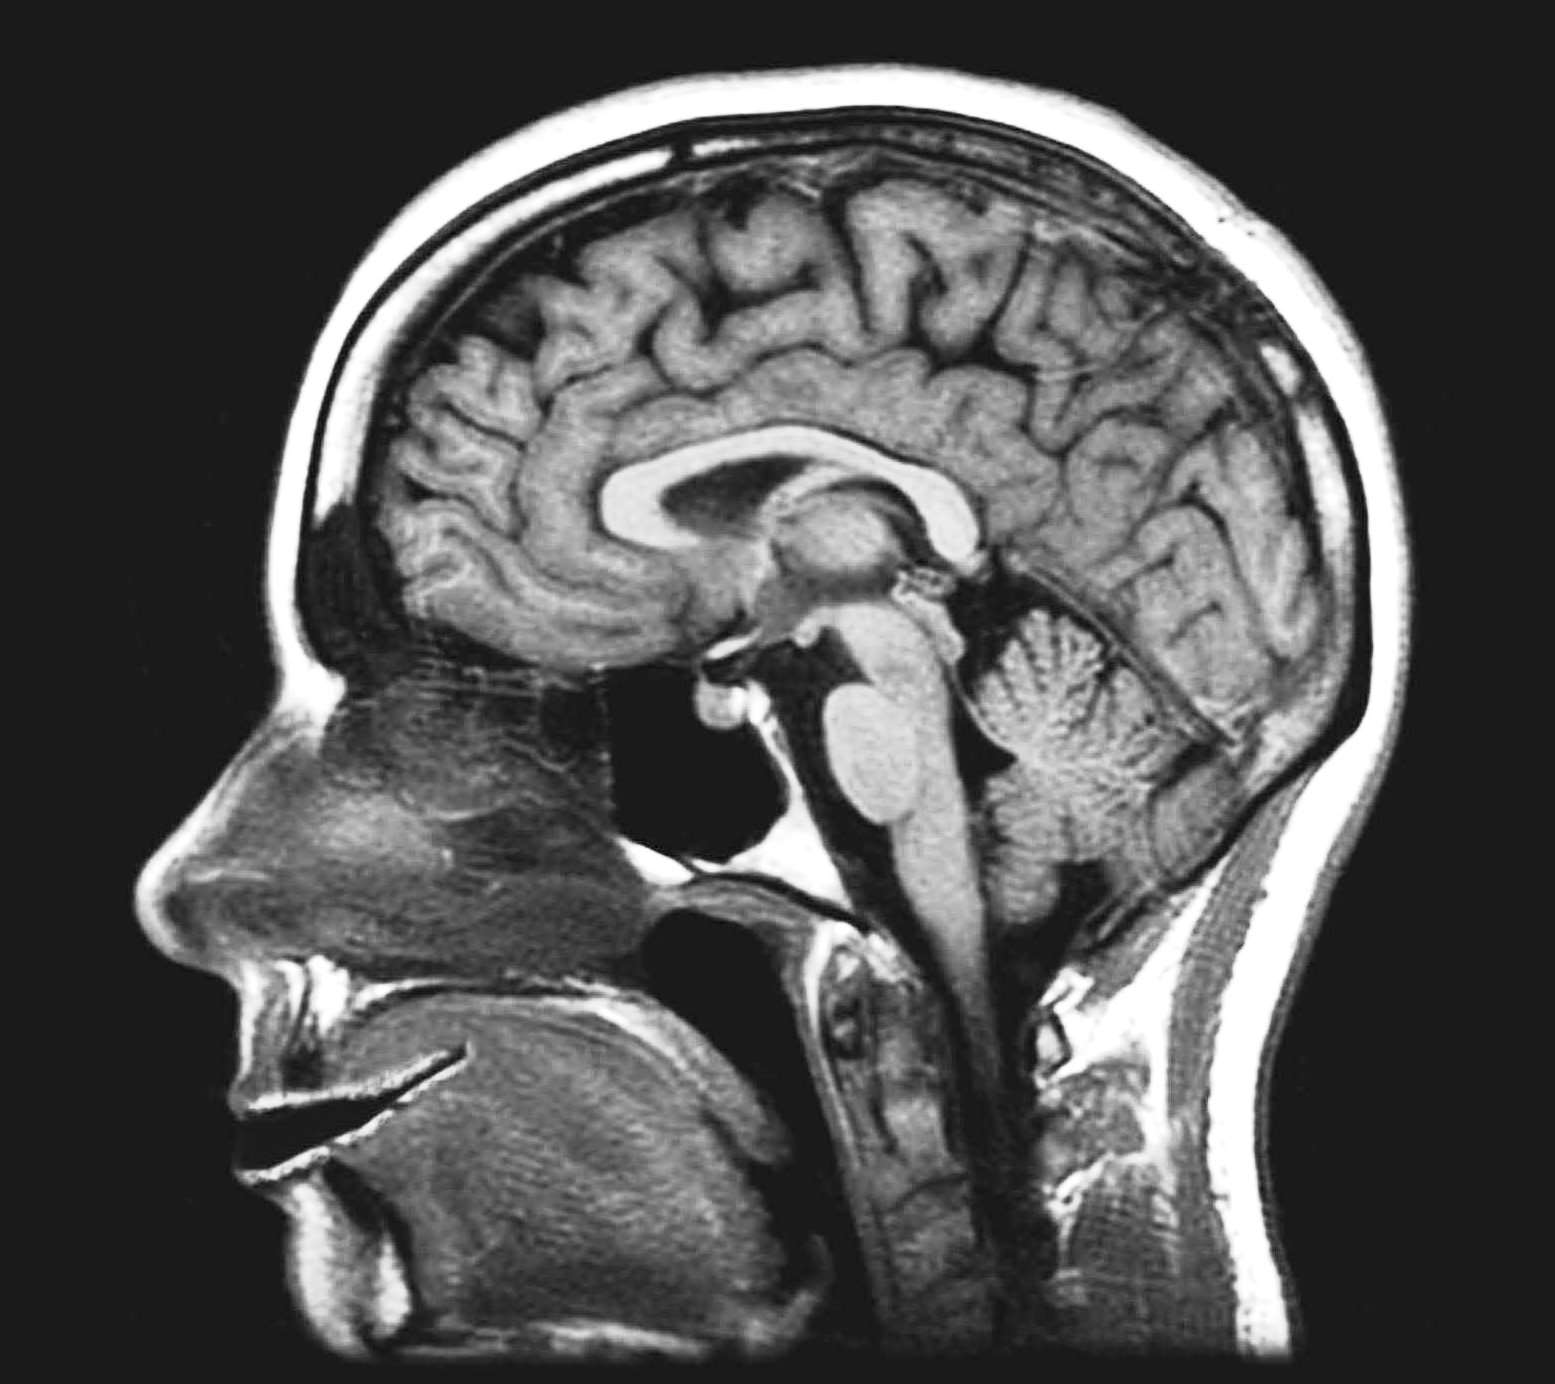 Фото снимок МРТ гипофиза здорового человека (норма)